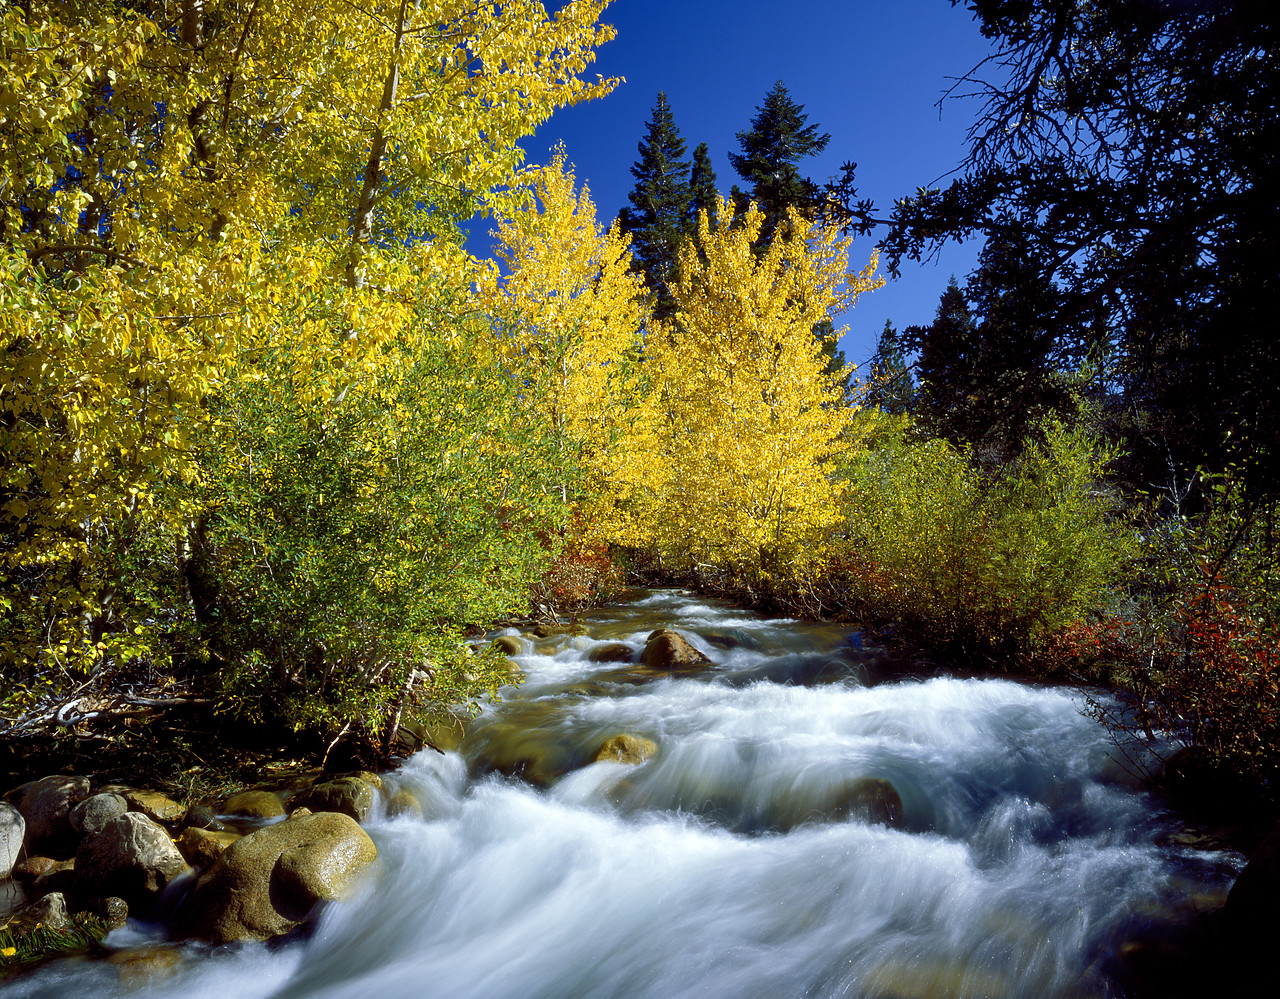 #8312 - Rushing Stream in Autumn, Lee Vining, California, USA